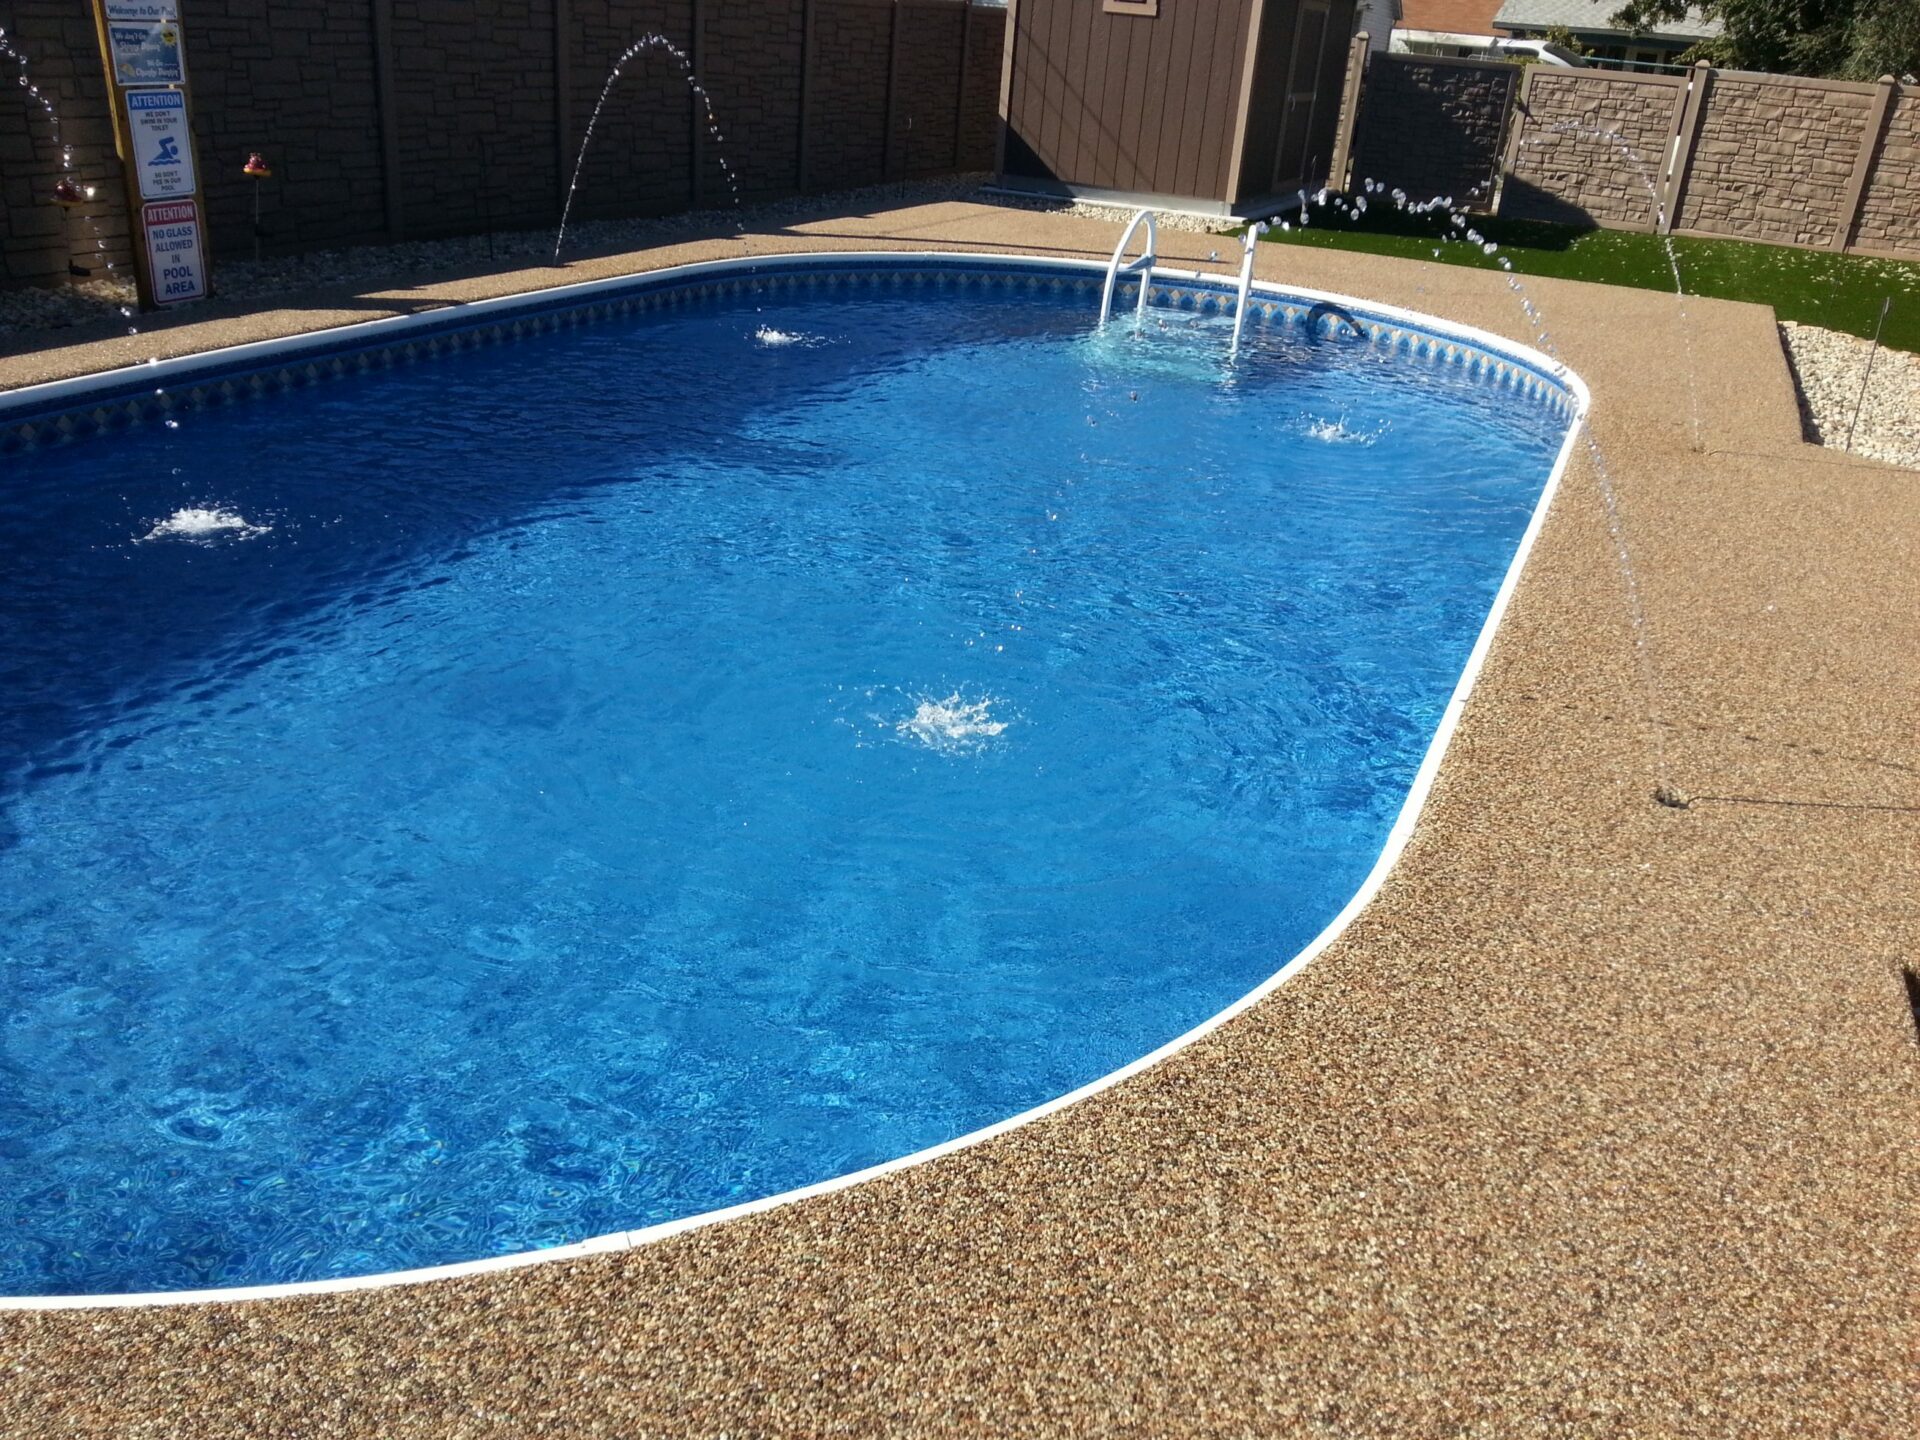 A backyard fiberglass pool